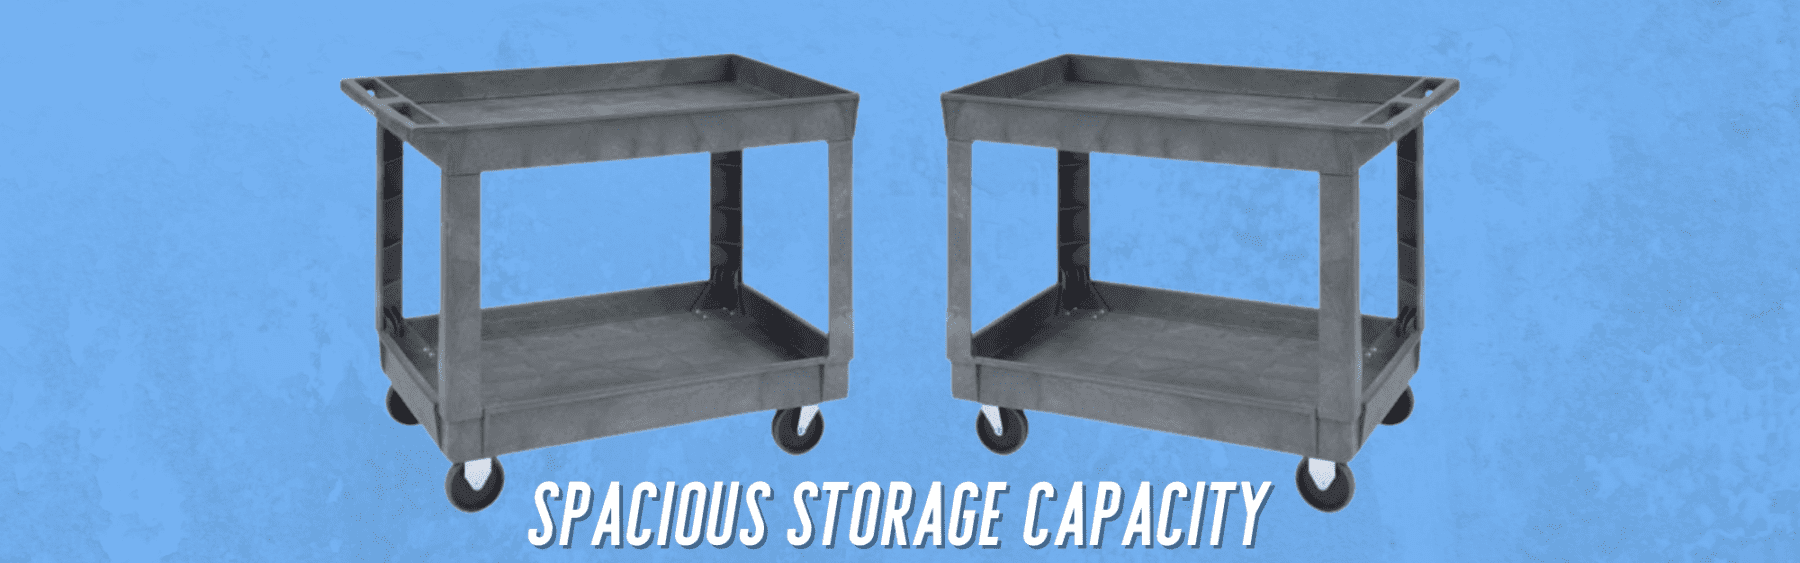 The spacious storage capacity of the Lakeside 2523.